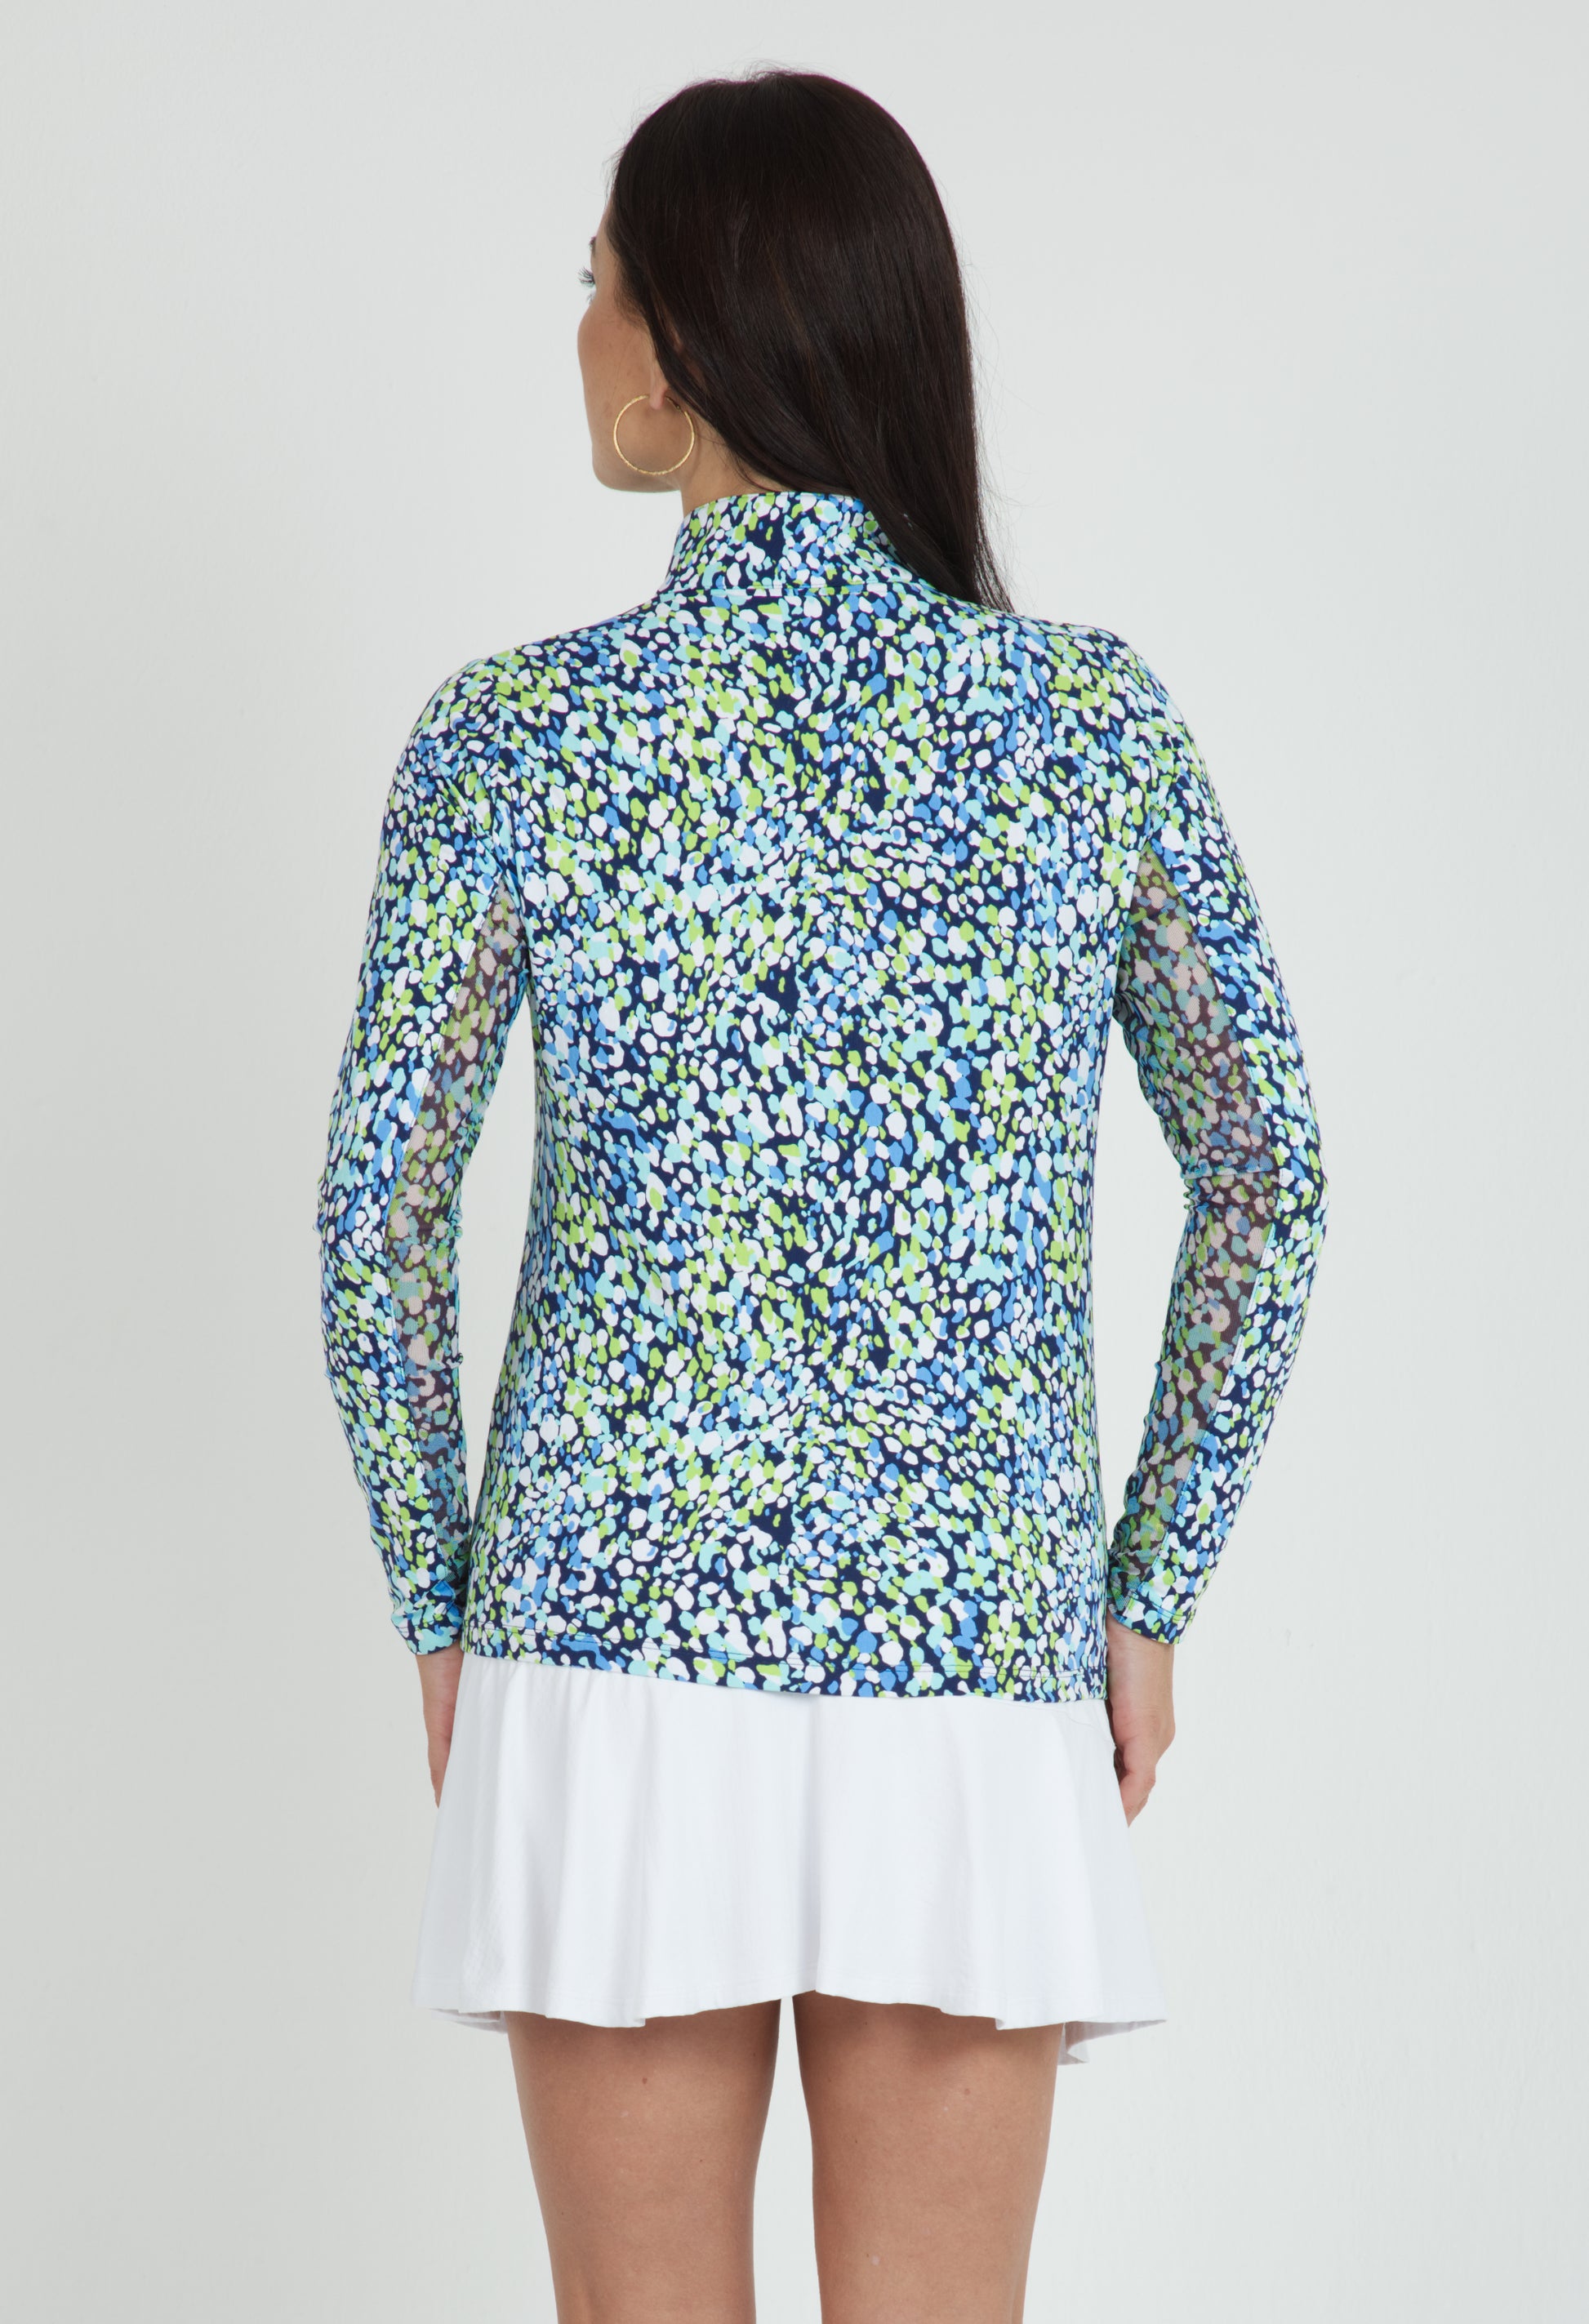 IBKÜL - Naomi Print Long Sleeve Mock Neck Top – 10761 - Color: Navy/Lime